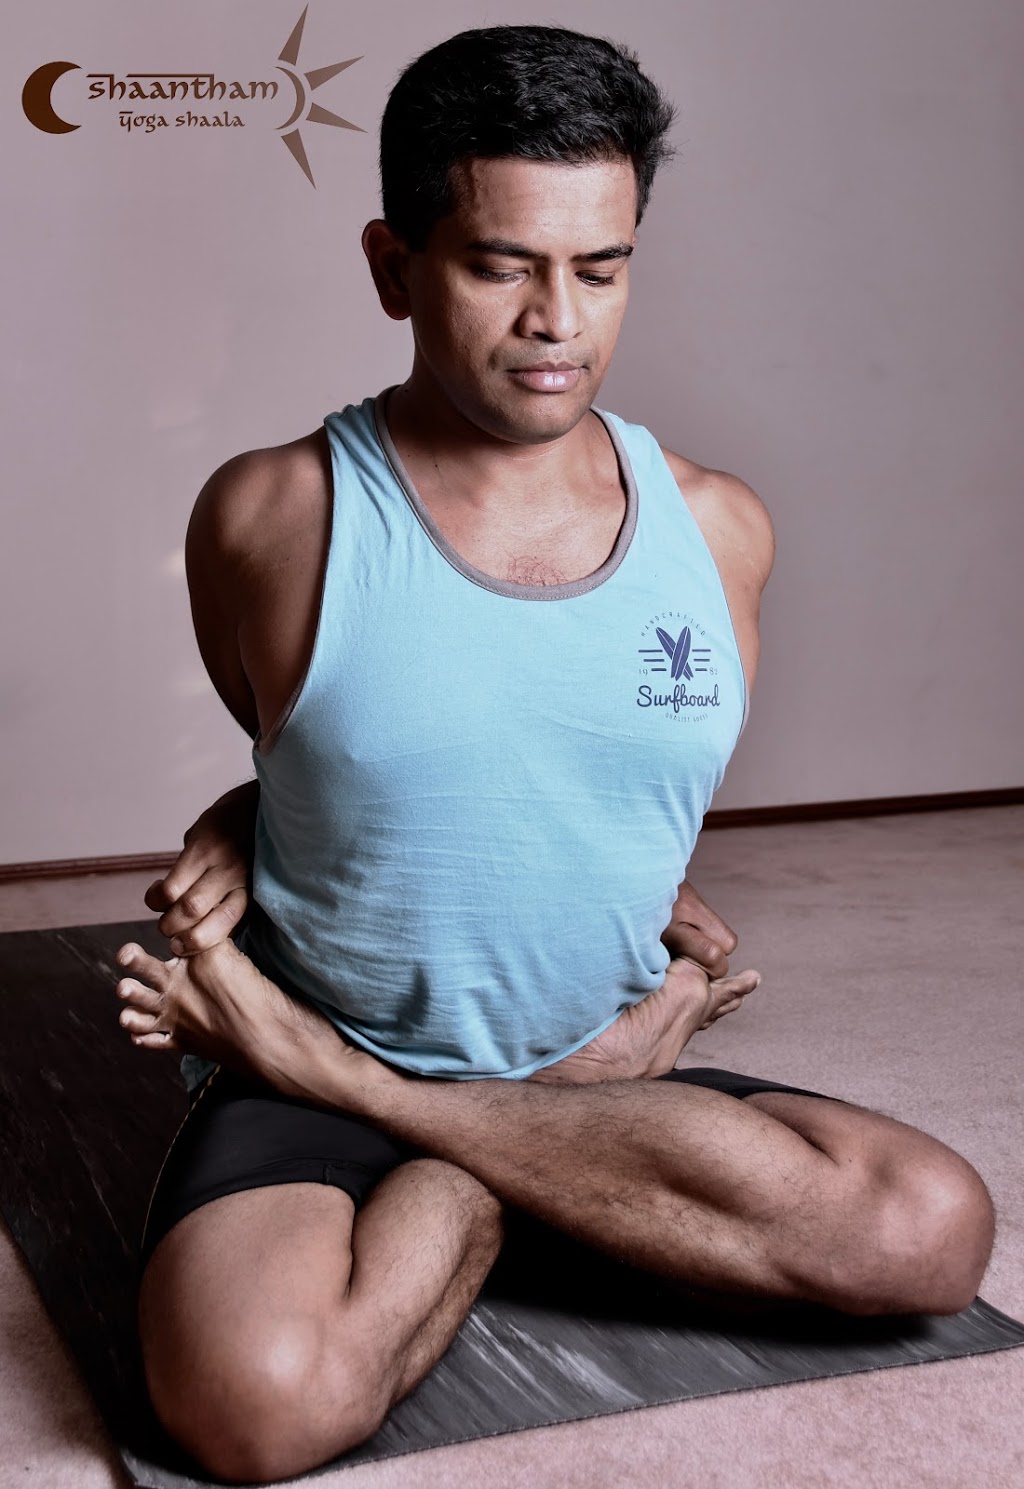 Shaantham Yoga Shaala | gym | 21 Milford Dr, Rouse Hill NSW 2155, Australia | 0423295871 OR +61 423 295 871